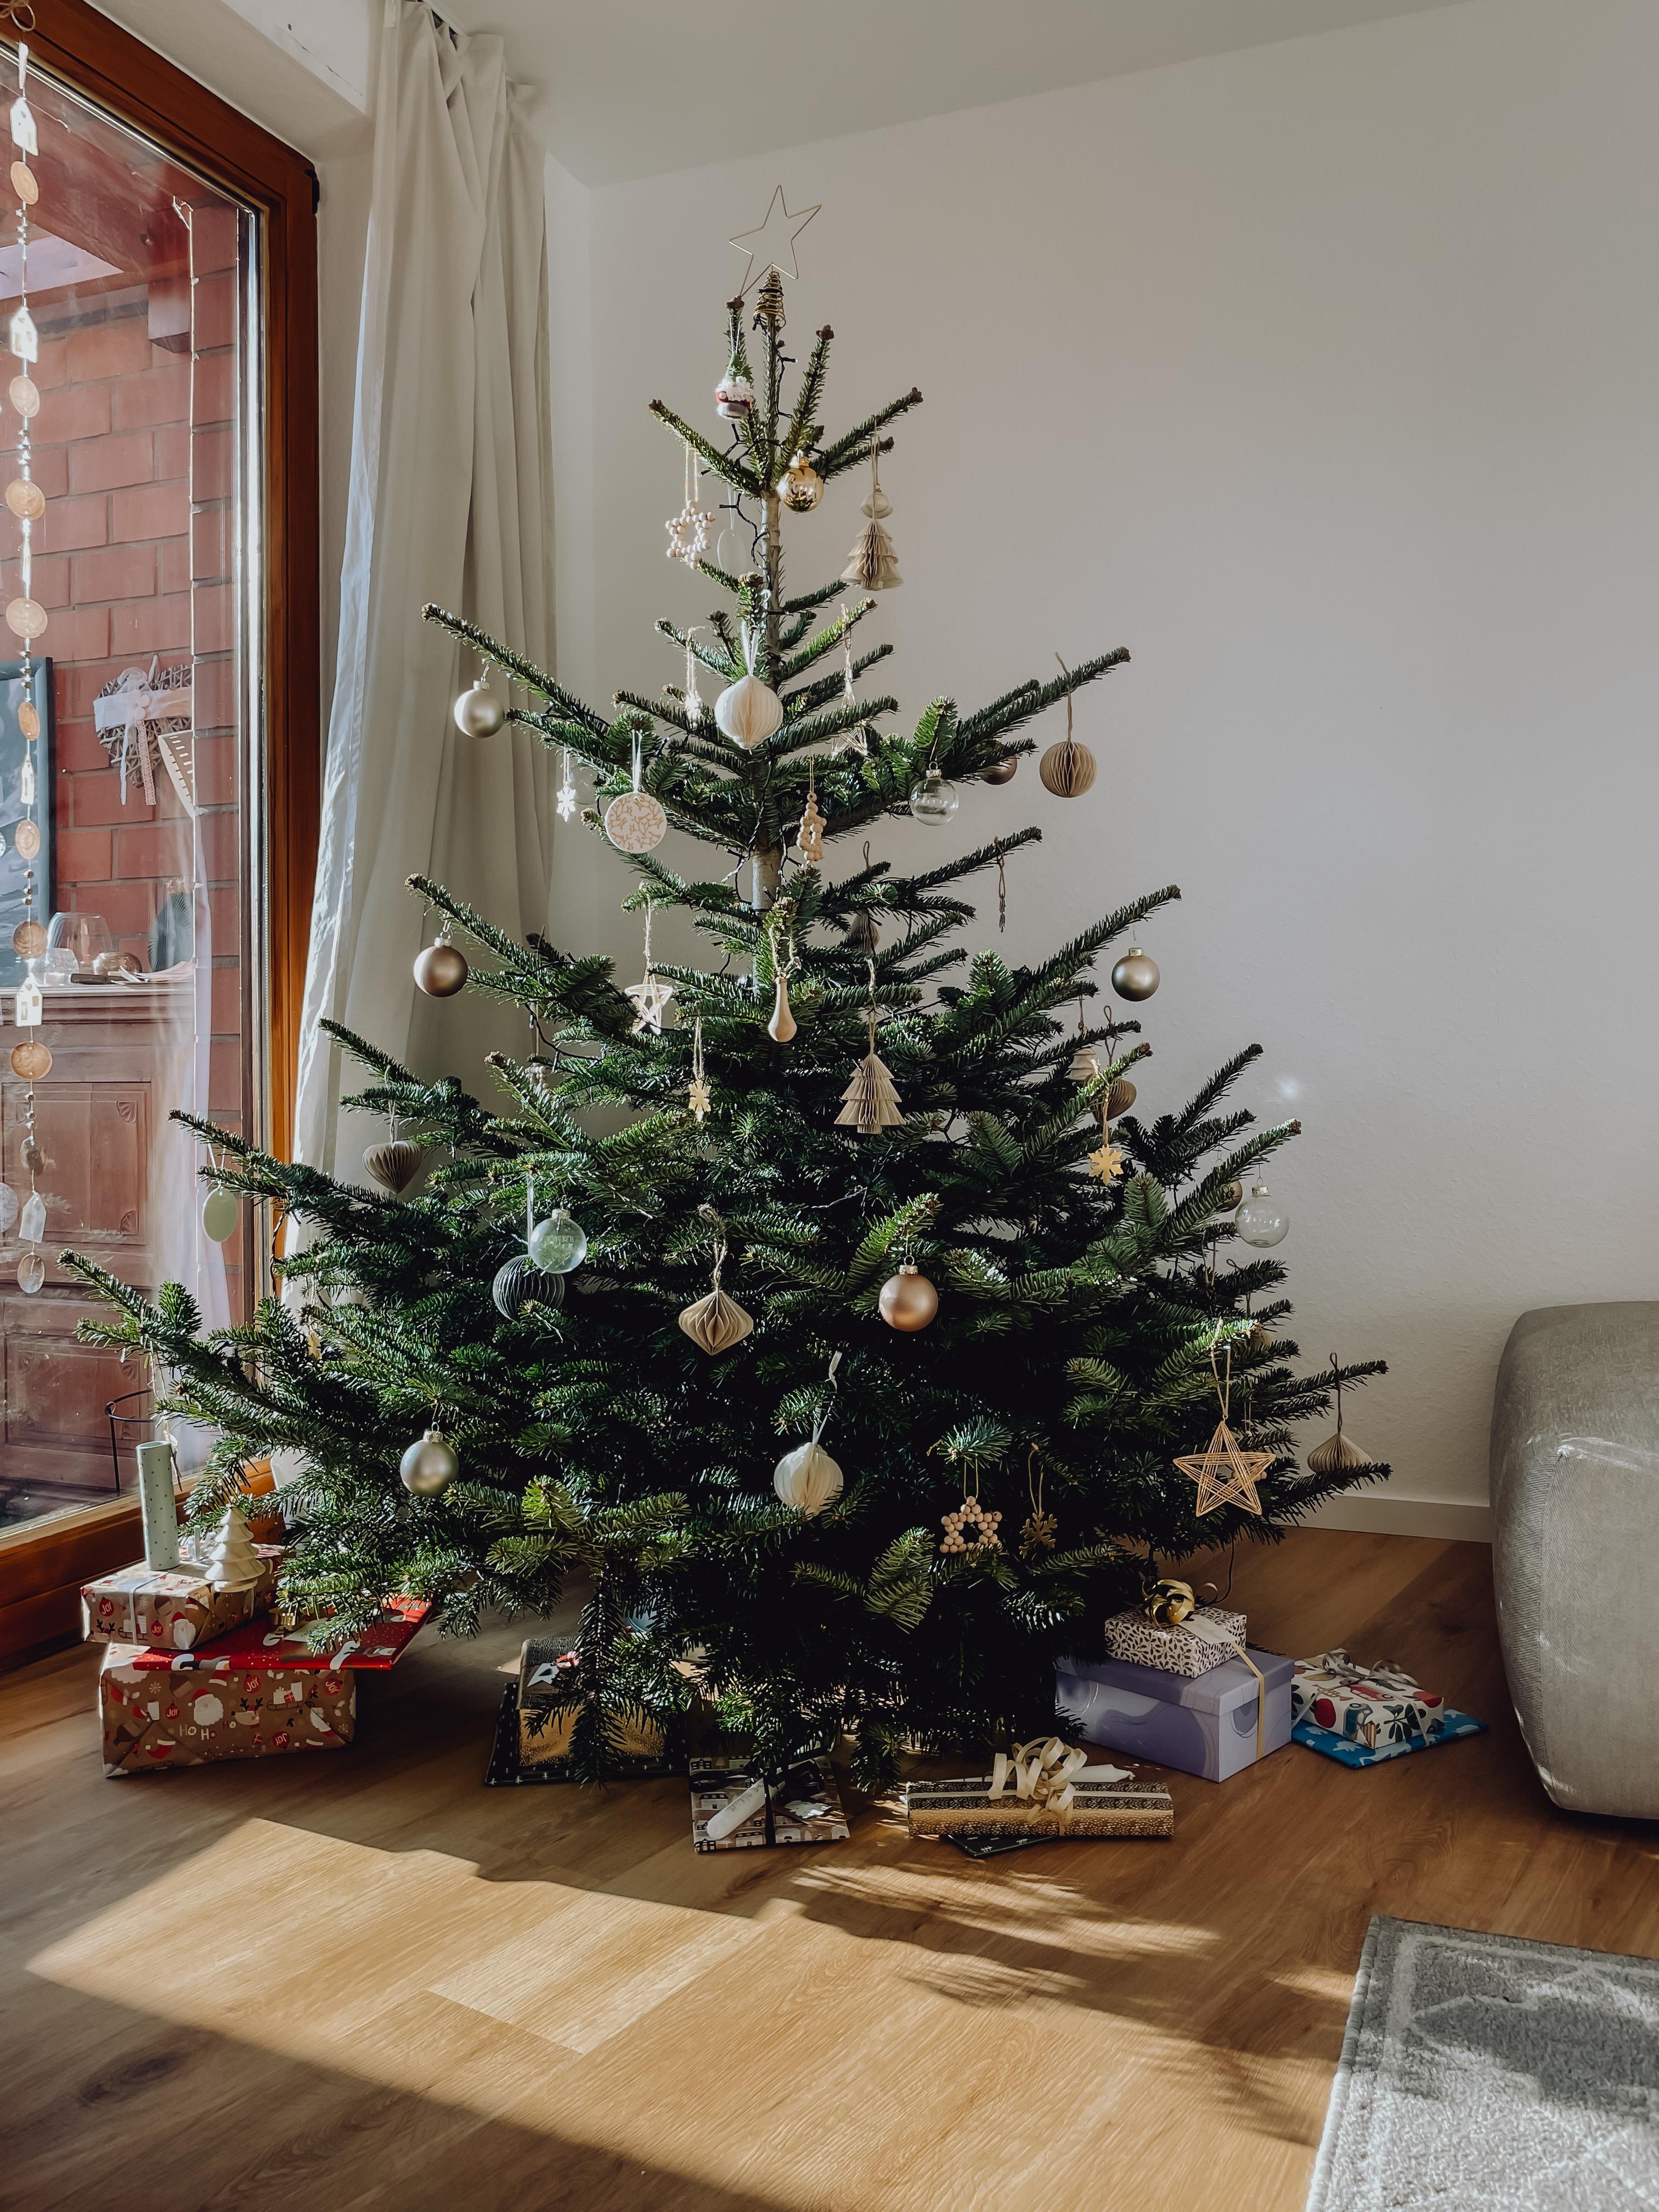 Merry Christmas 🎄
#merrychristmas #weihnachten #tannenbaum